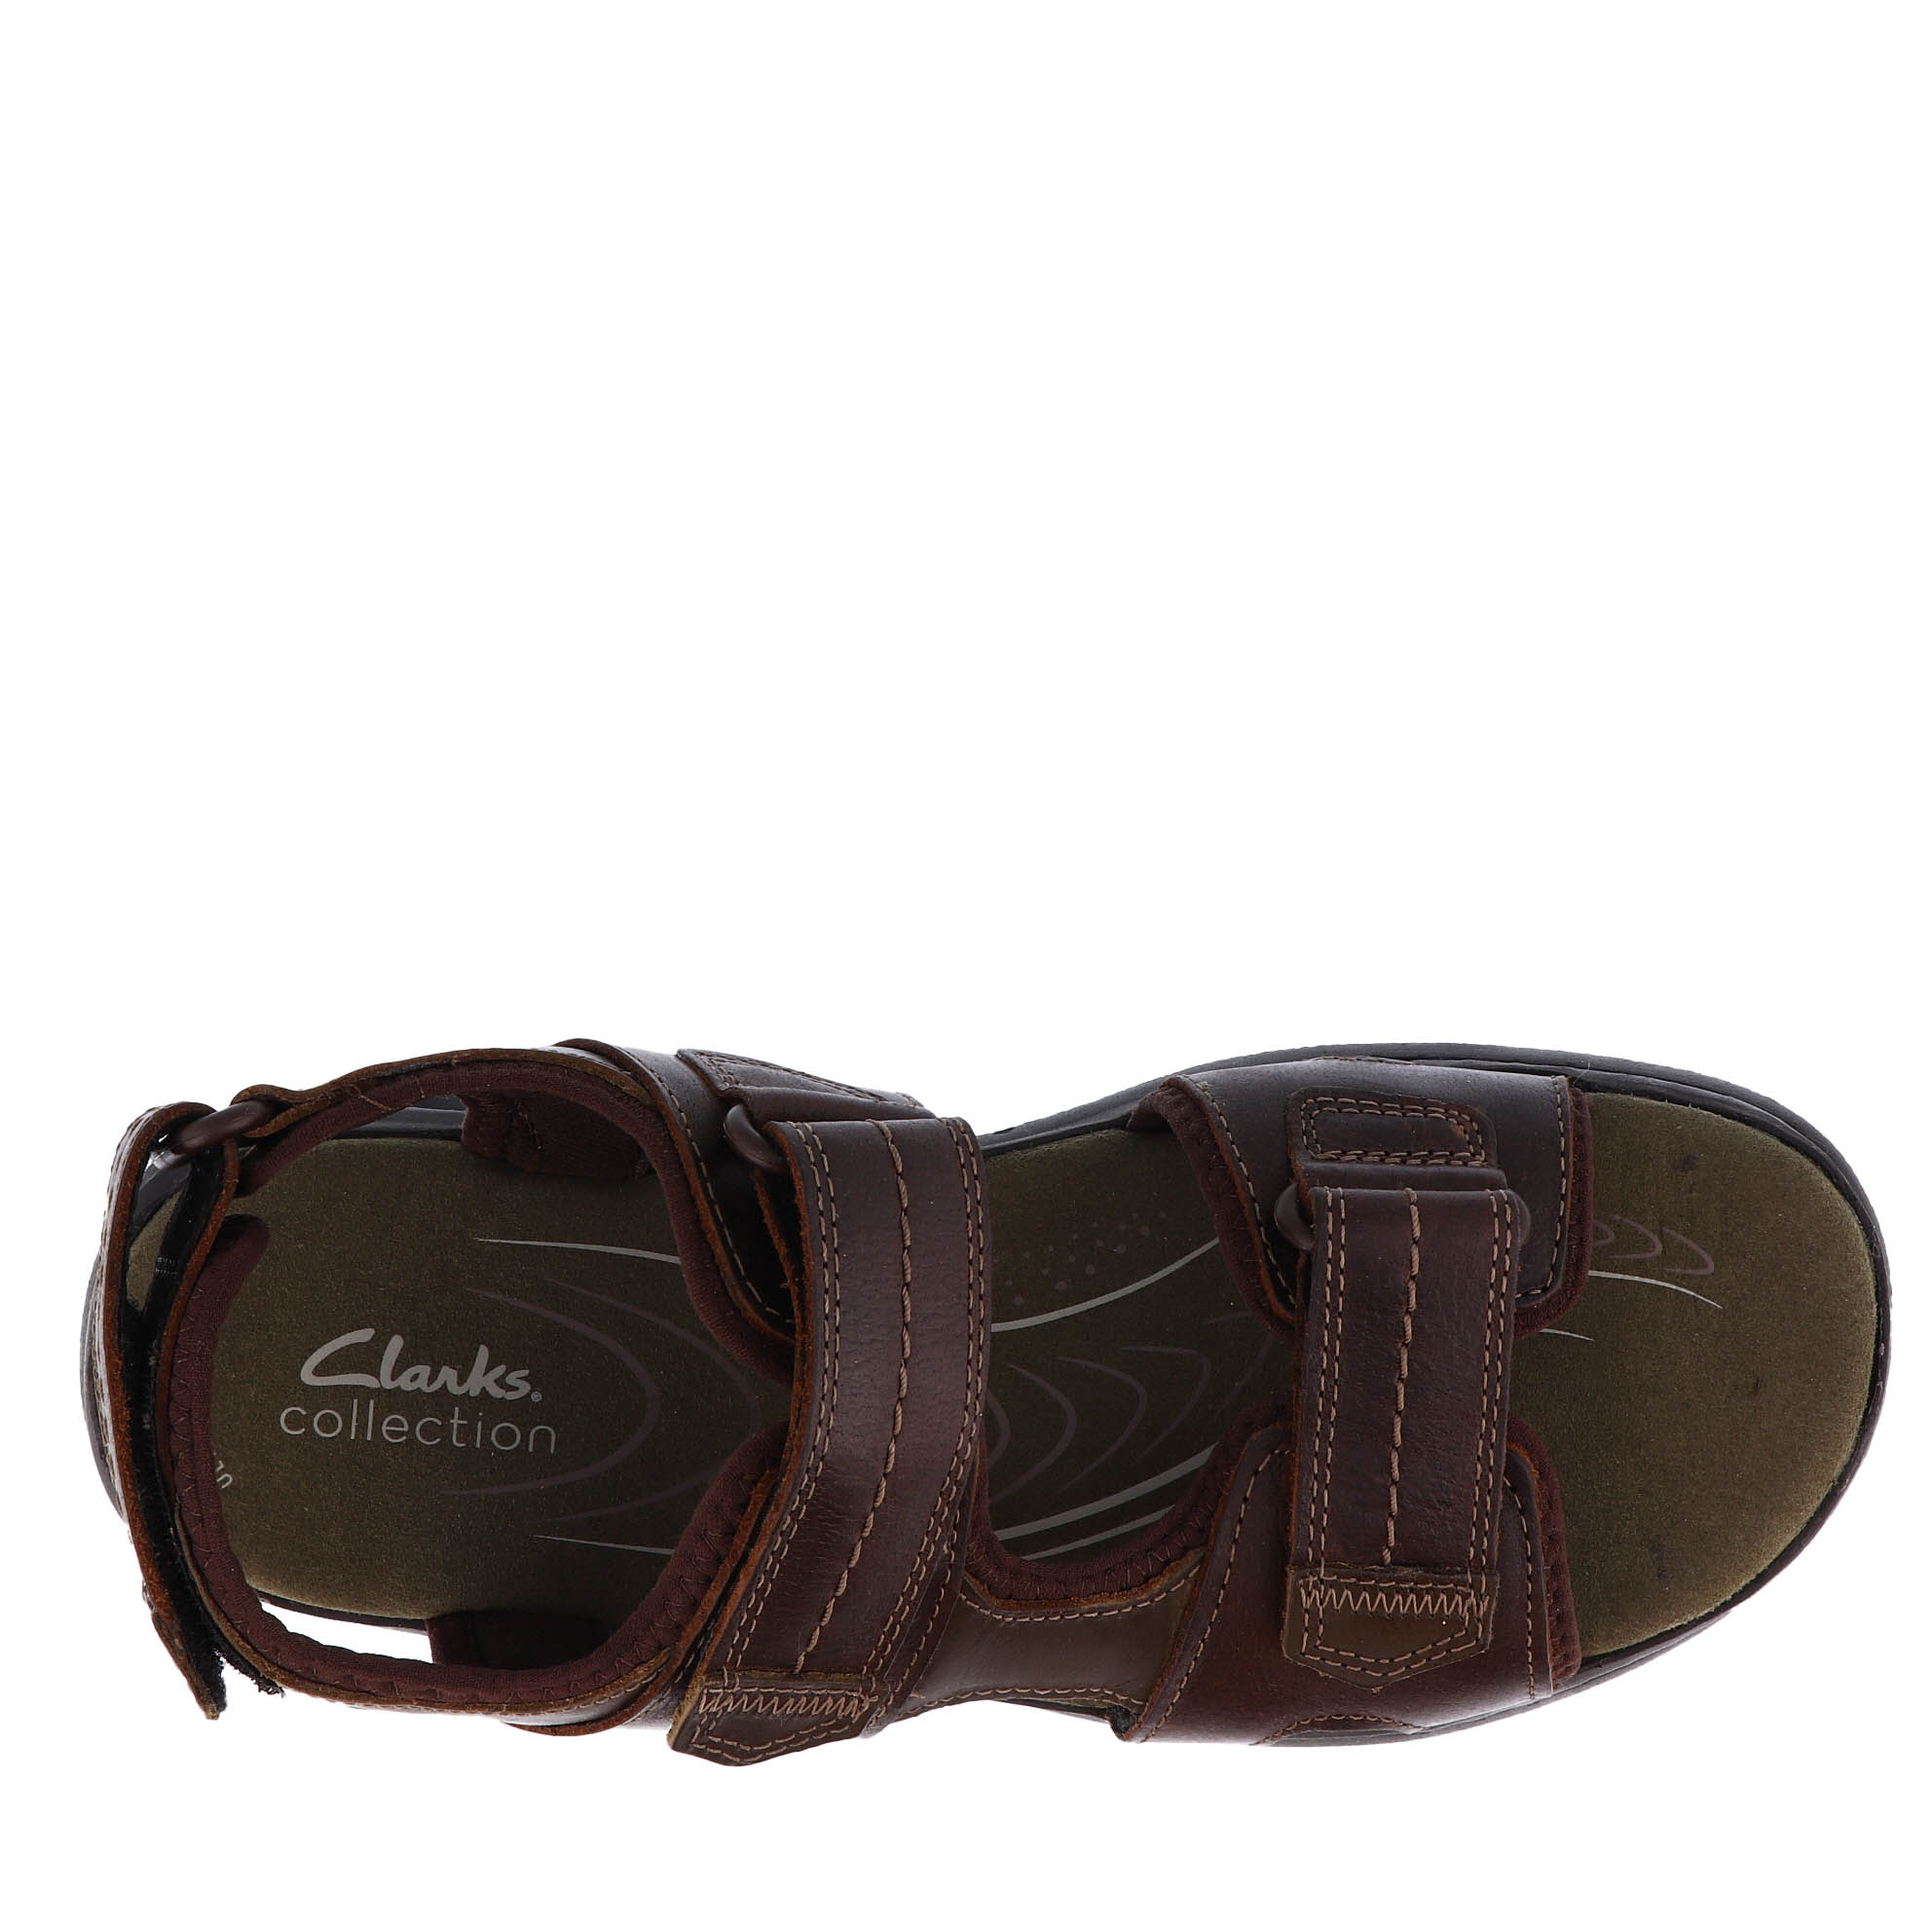 Amazon Has an Incredible Deal on Clarks Men's Chukka Boots - IGN